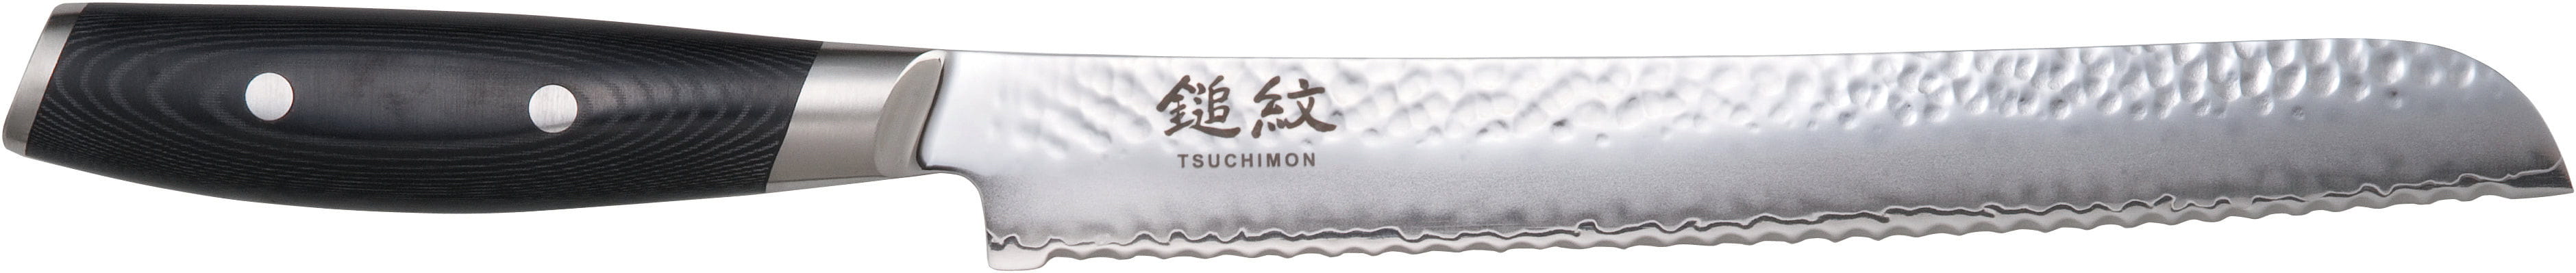 Yaxell tsuchimon chlebový nůž, 23 cm